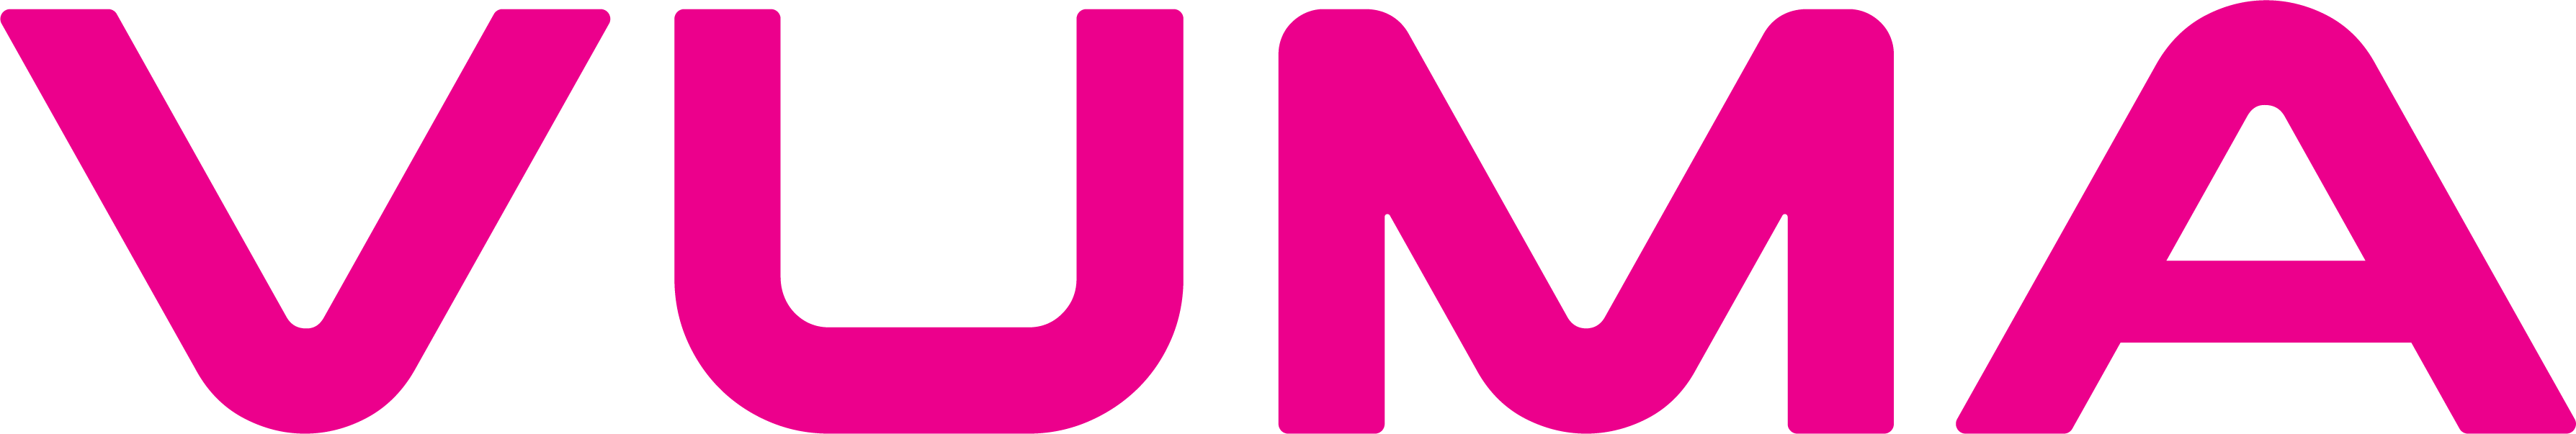 Vuma_logo